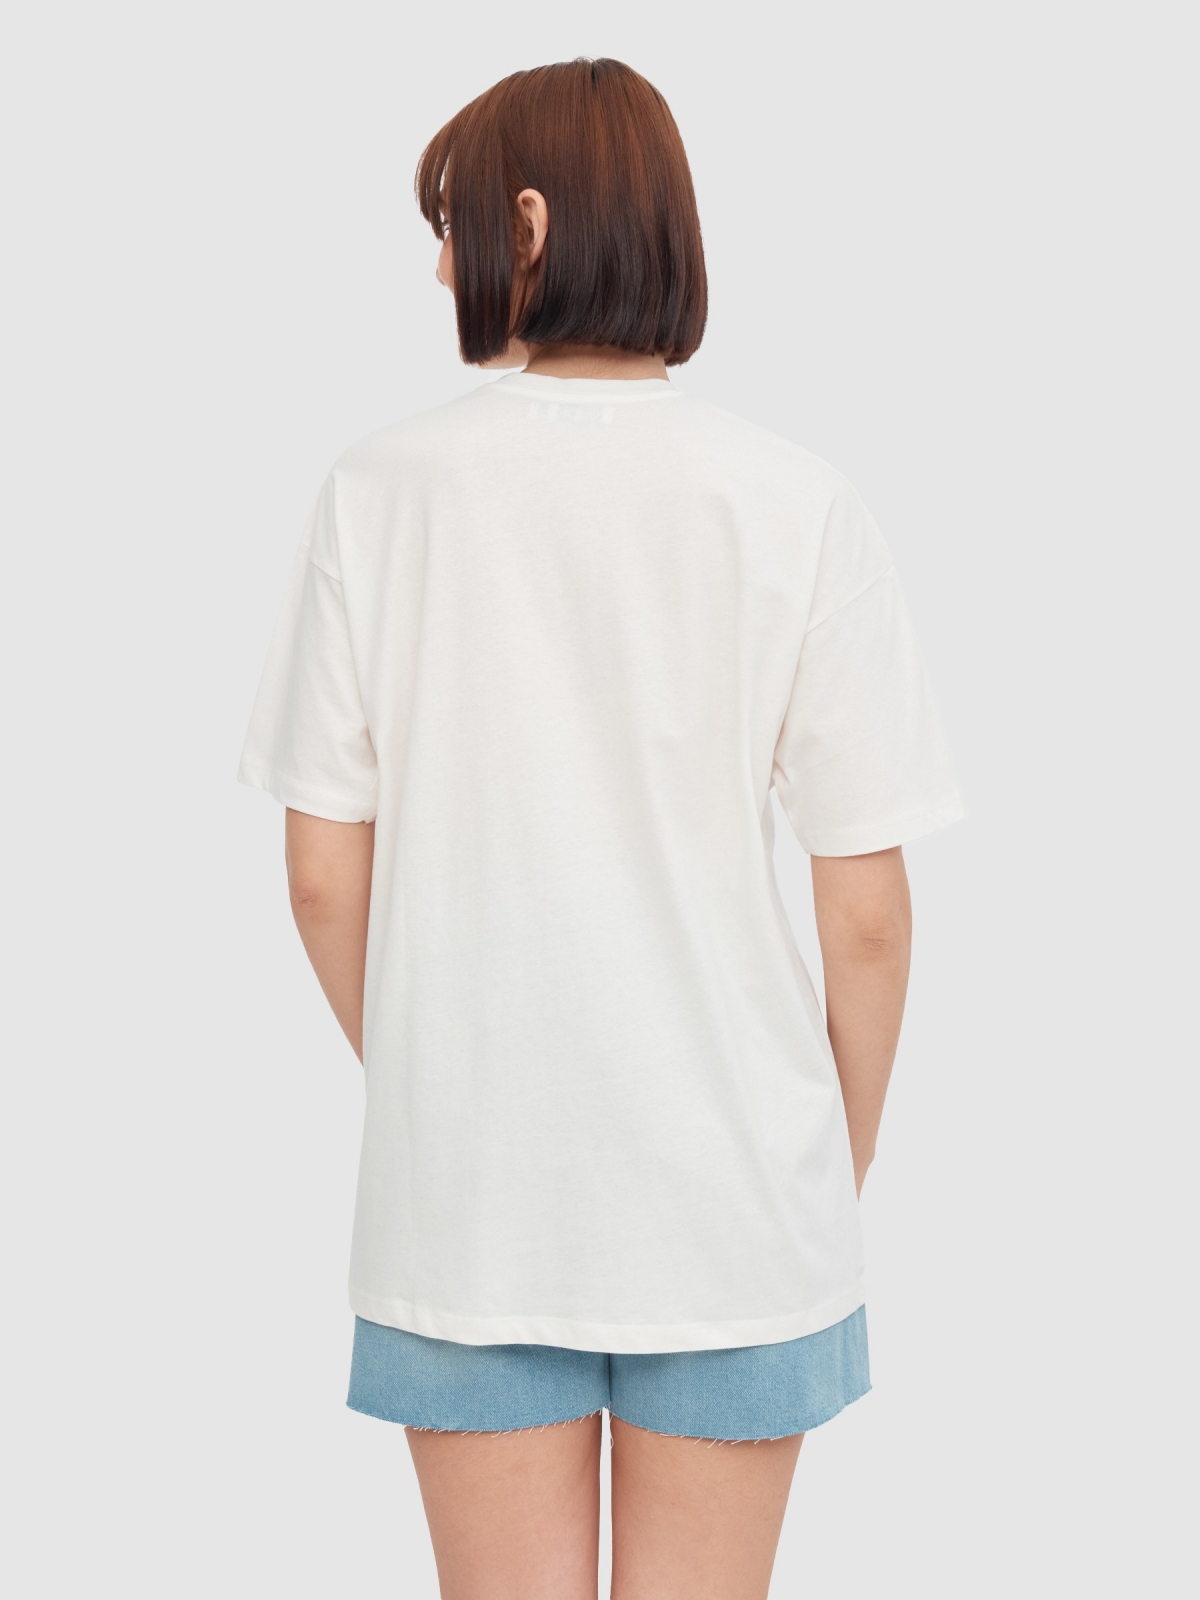 Camiseta oversize Mariposa blanco roto vista media trasera